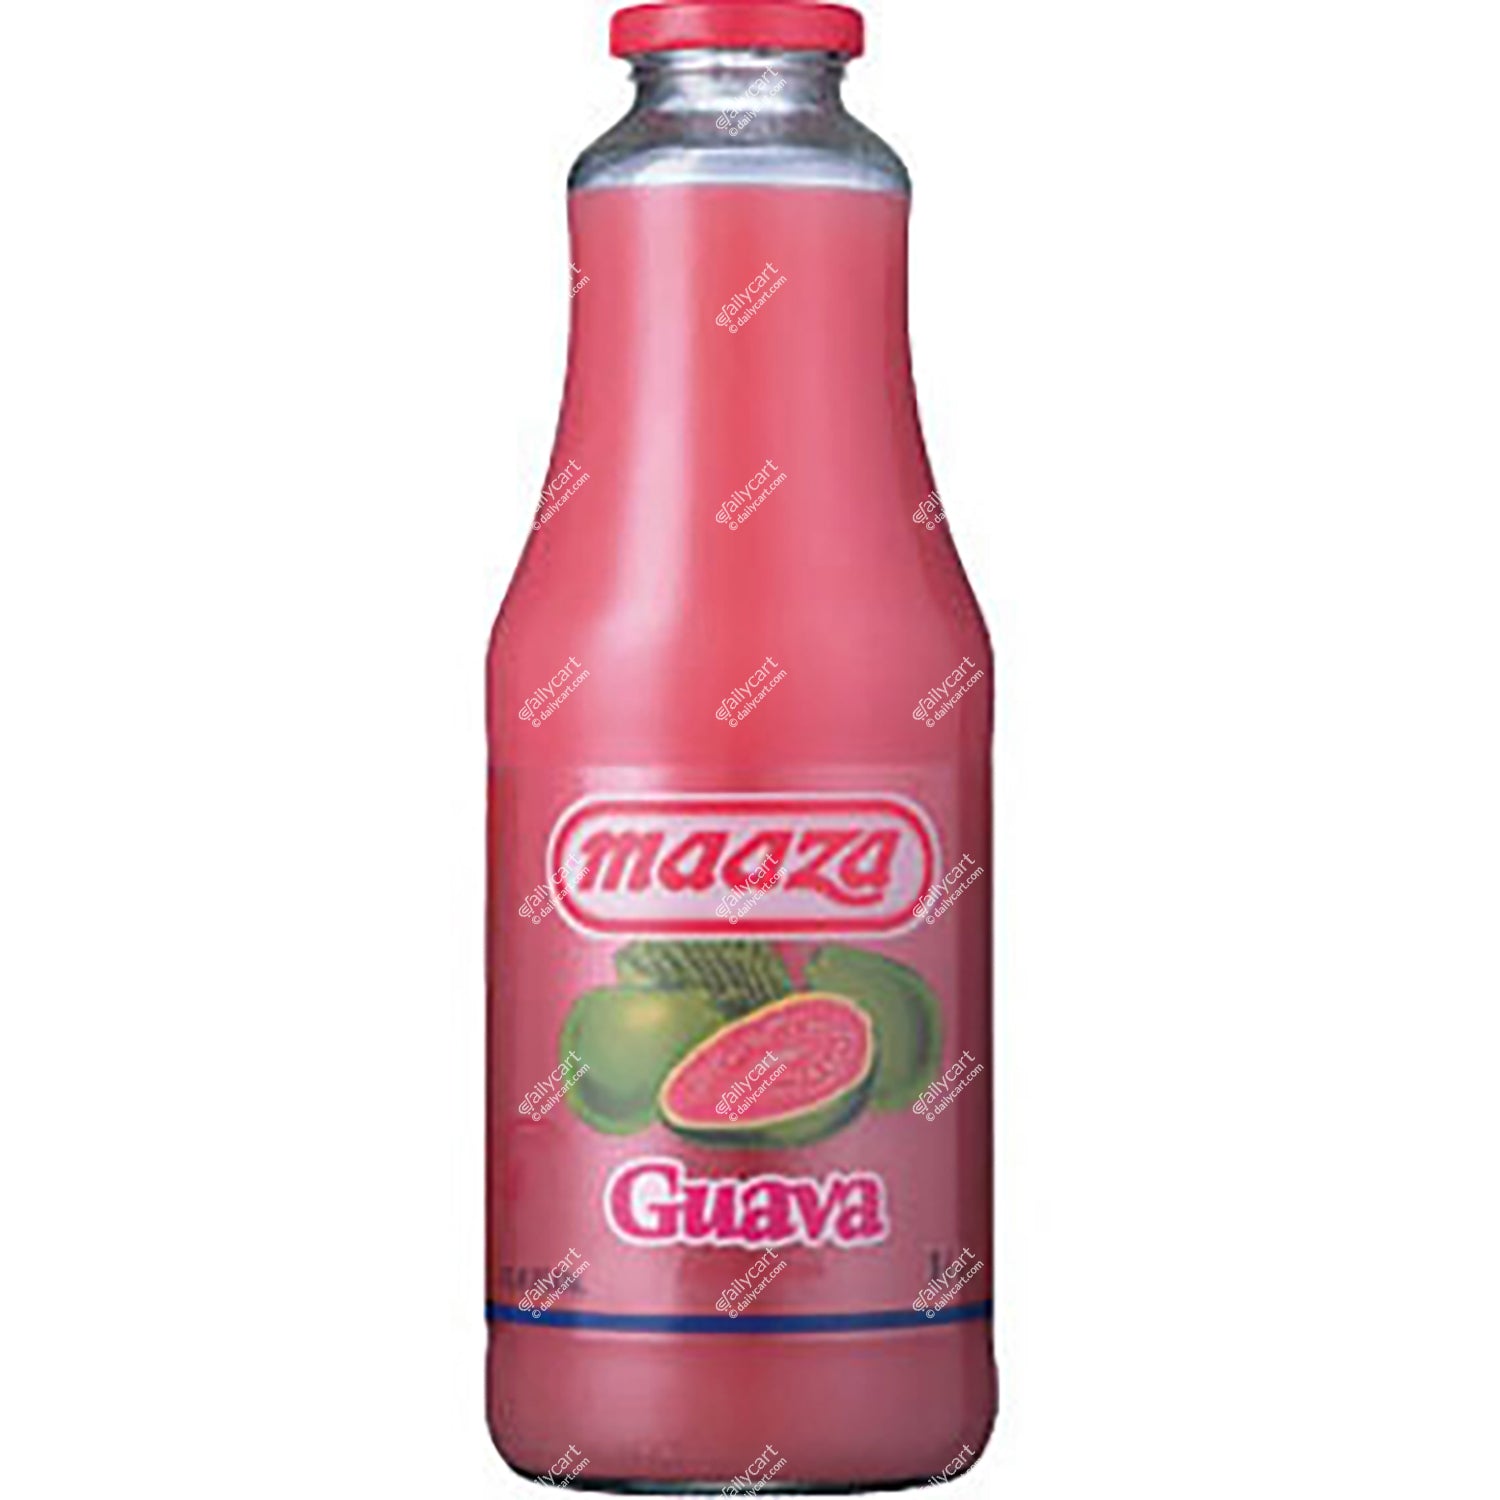 Maaza Guava Juice, 1 litre, Glass Bottle